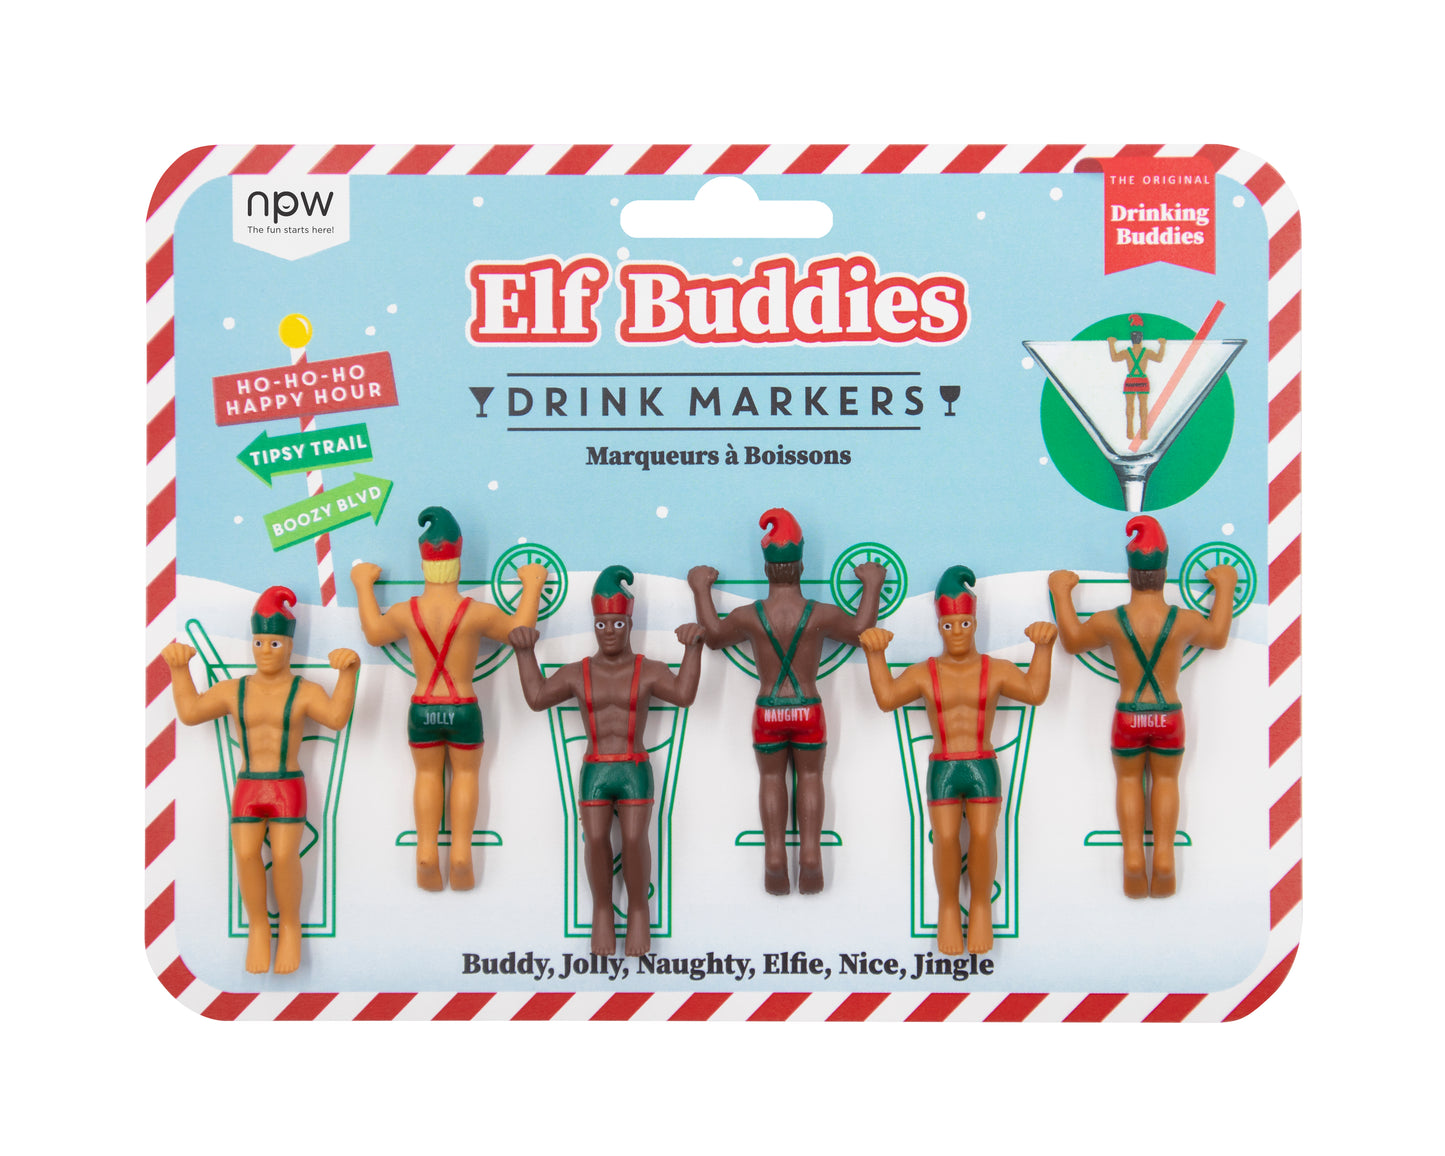 Elf Buddies Drink Markers